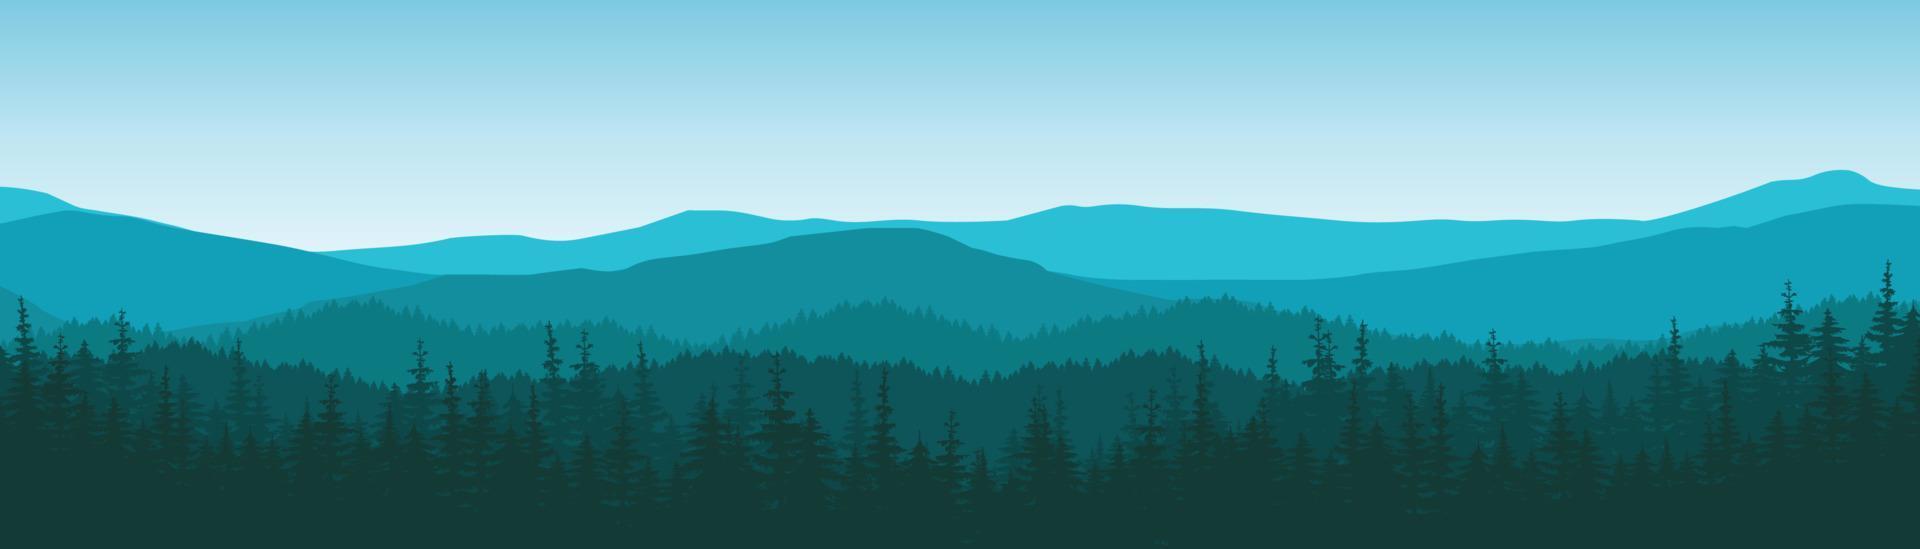 Vektorhintergrund mit mountains.eps10 file.illustration vektor